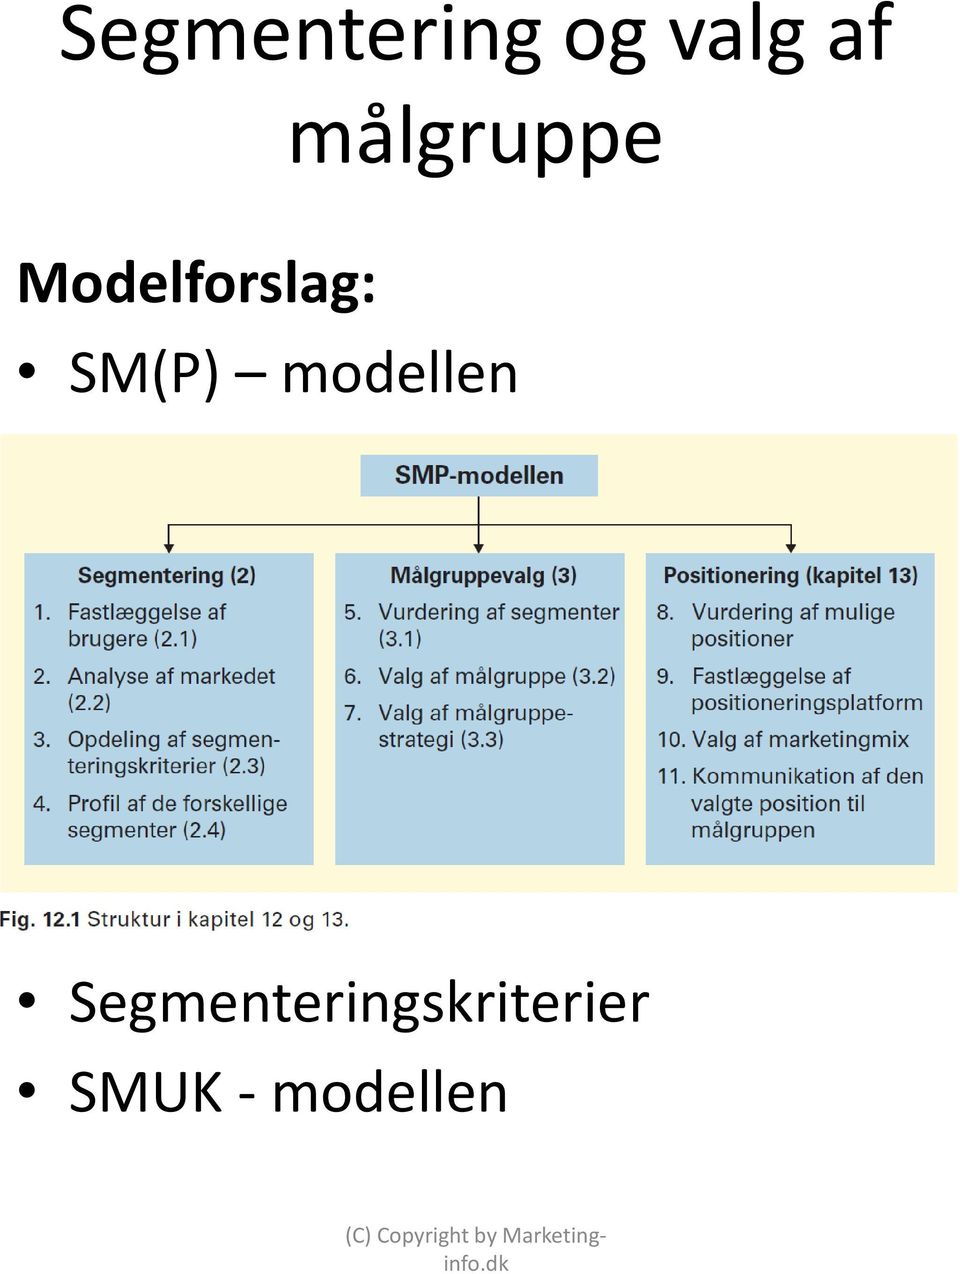 SM(P) modellen